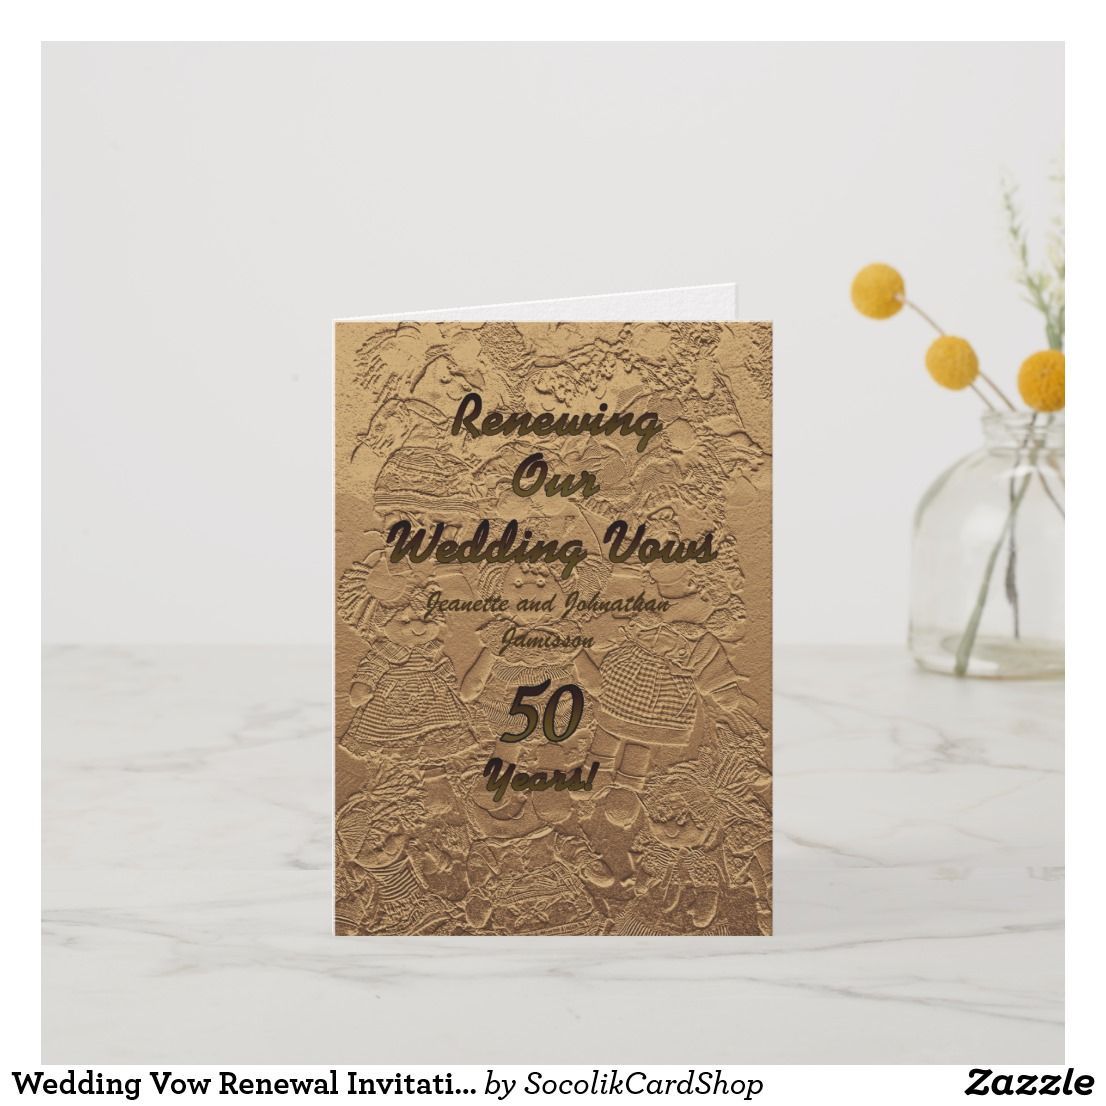 Wedding Vow Renewal Invitation 50 Years Golden | Zazzle.com -   15 wedding Small vow renewals ideas